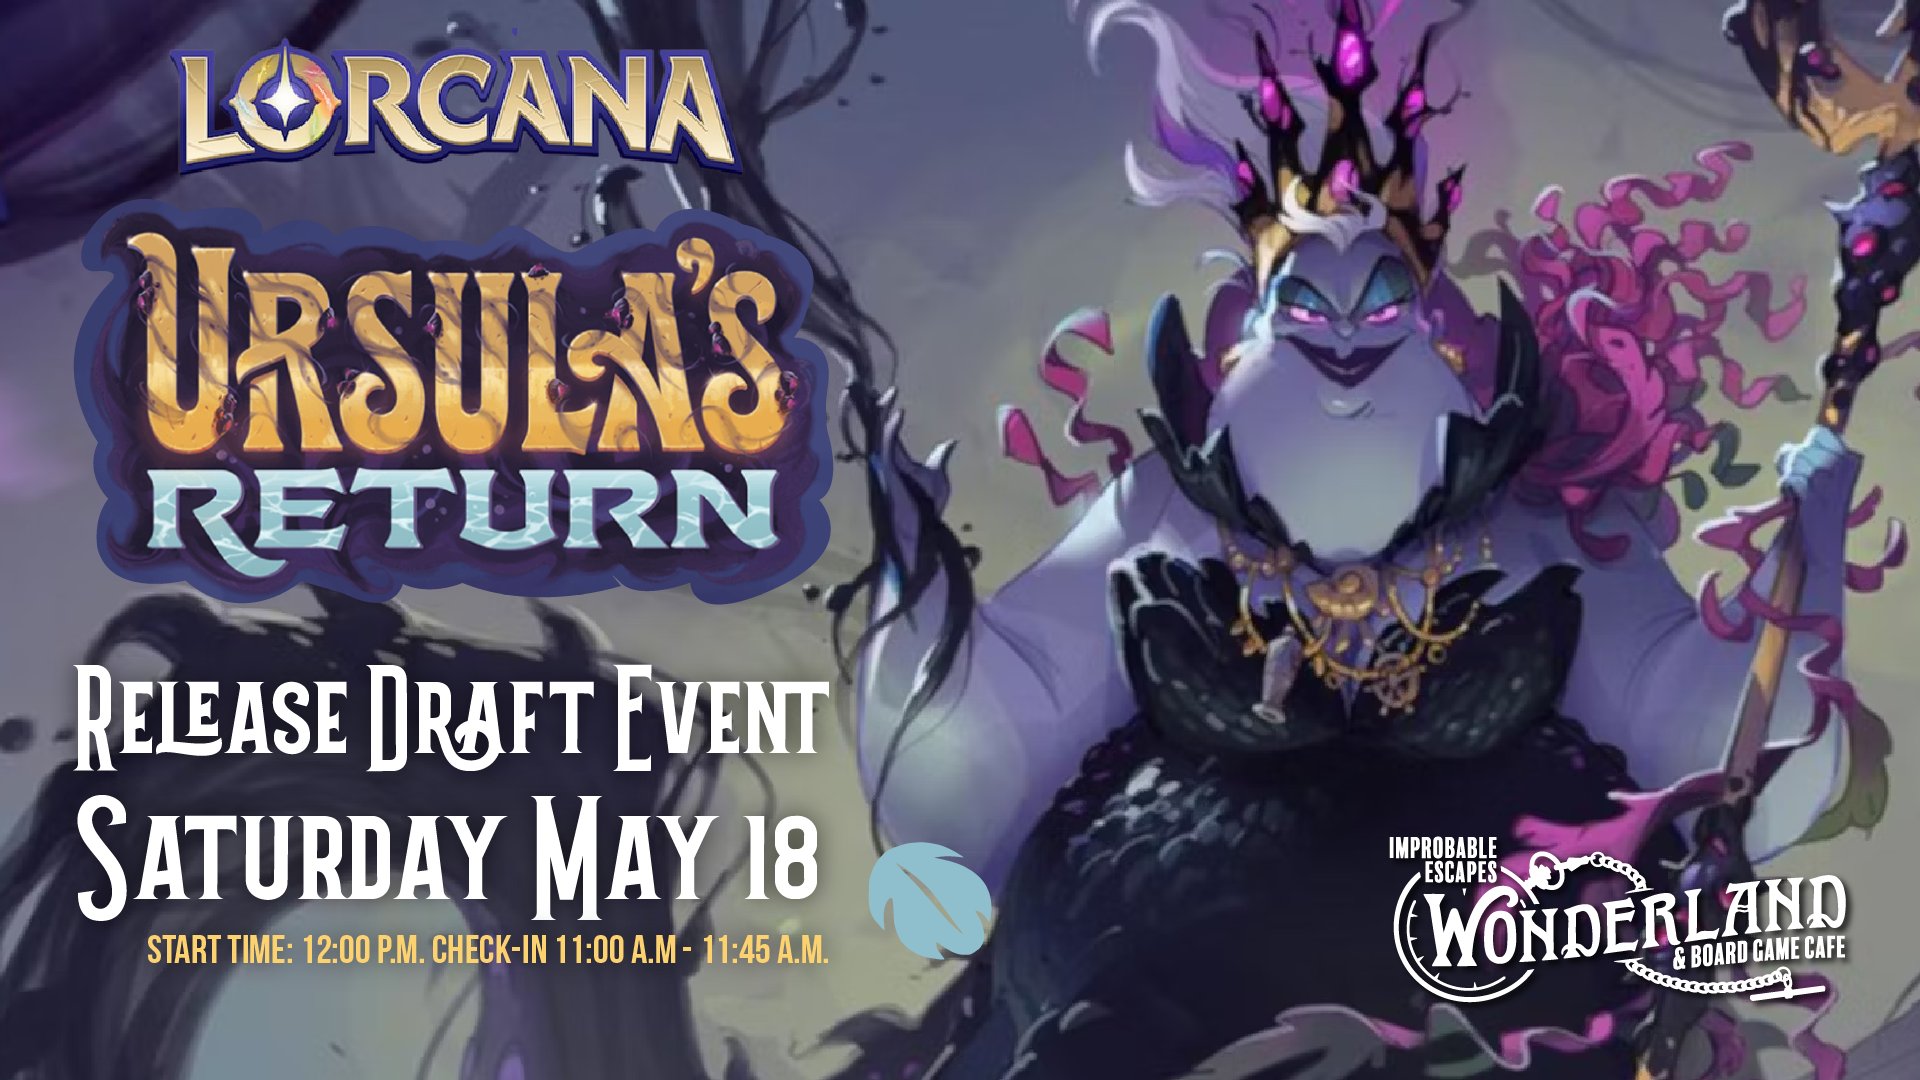 Disney Lorcana: Ursula's Return Release Draft Event